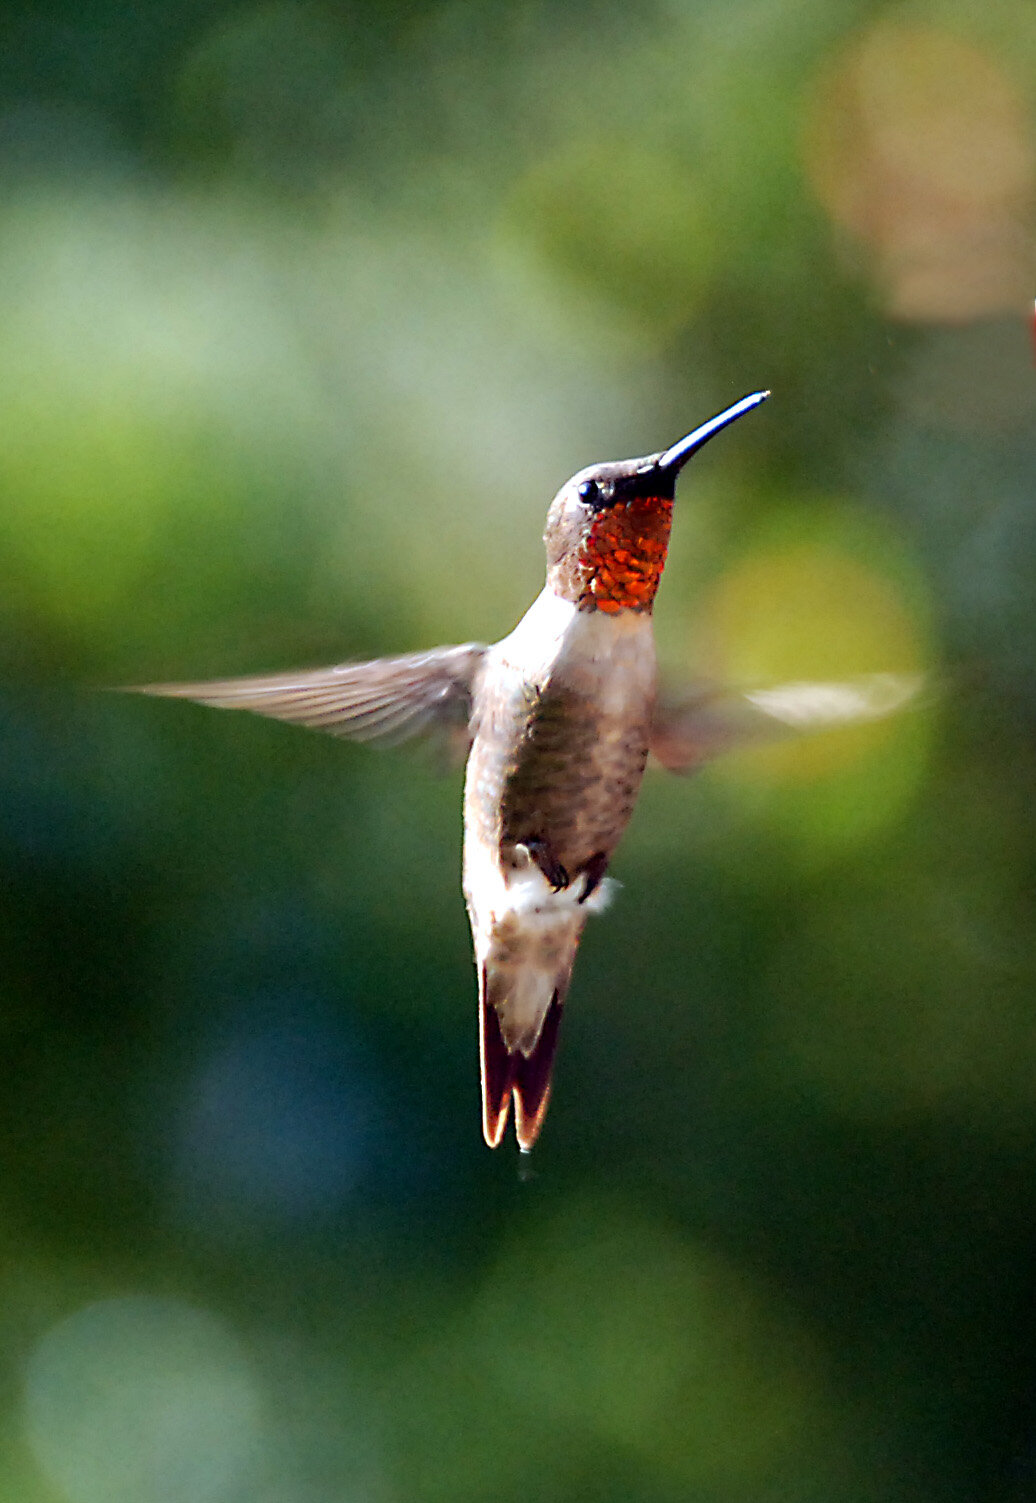 Ruby-throated hummingbird photo by Carol Foil